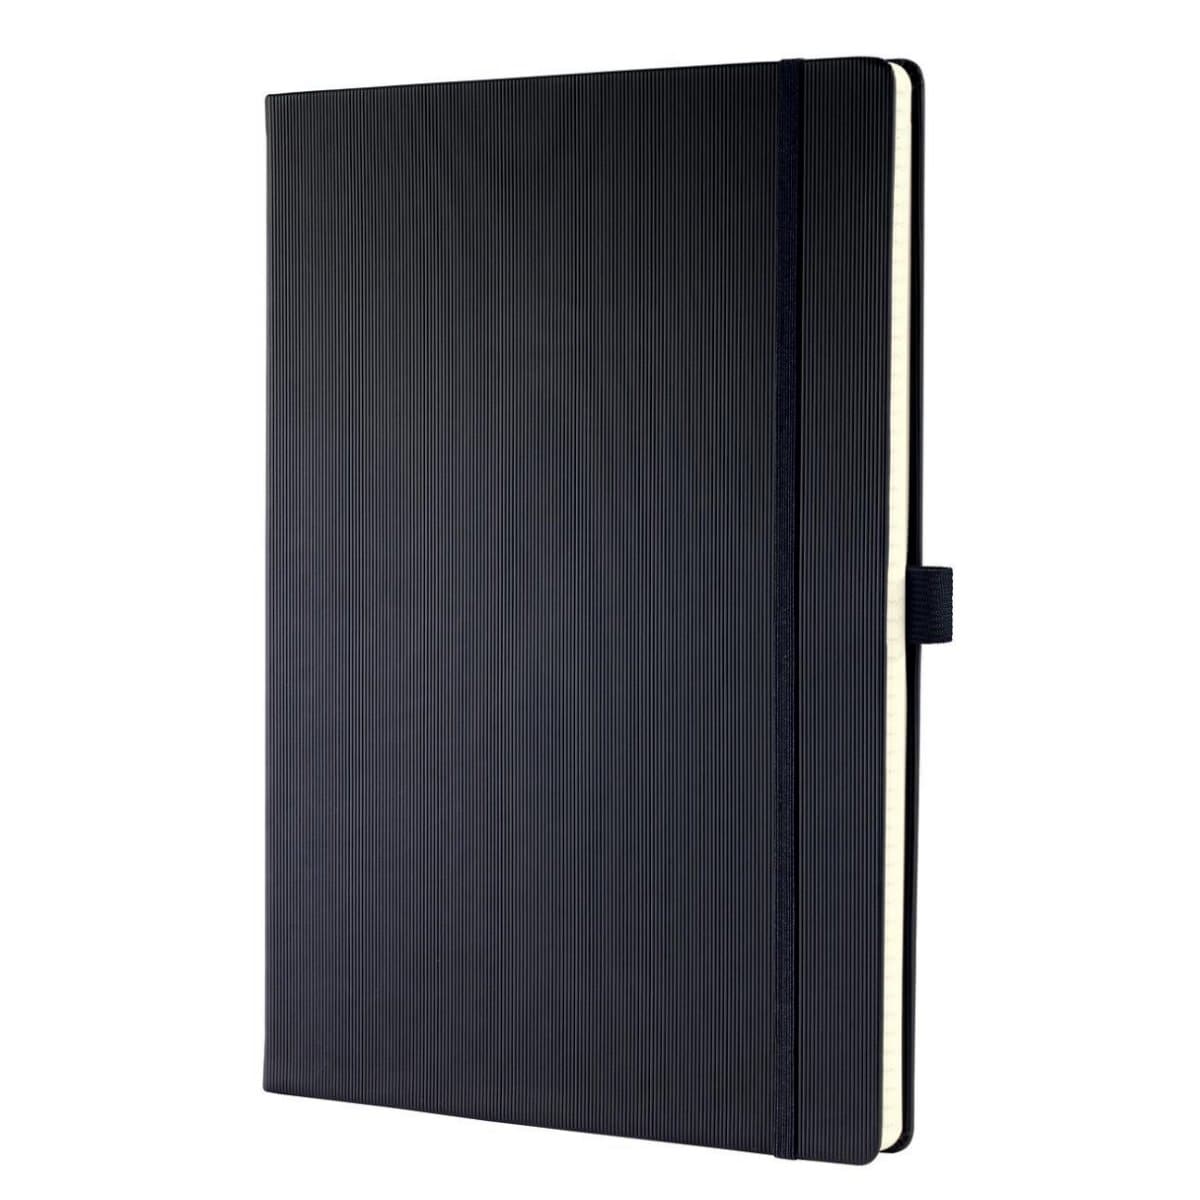 Sigel Notebook CONCEPTUM A4, Hardcover, Lined, Black